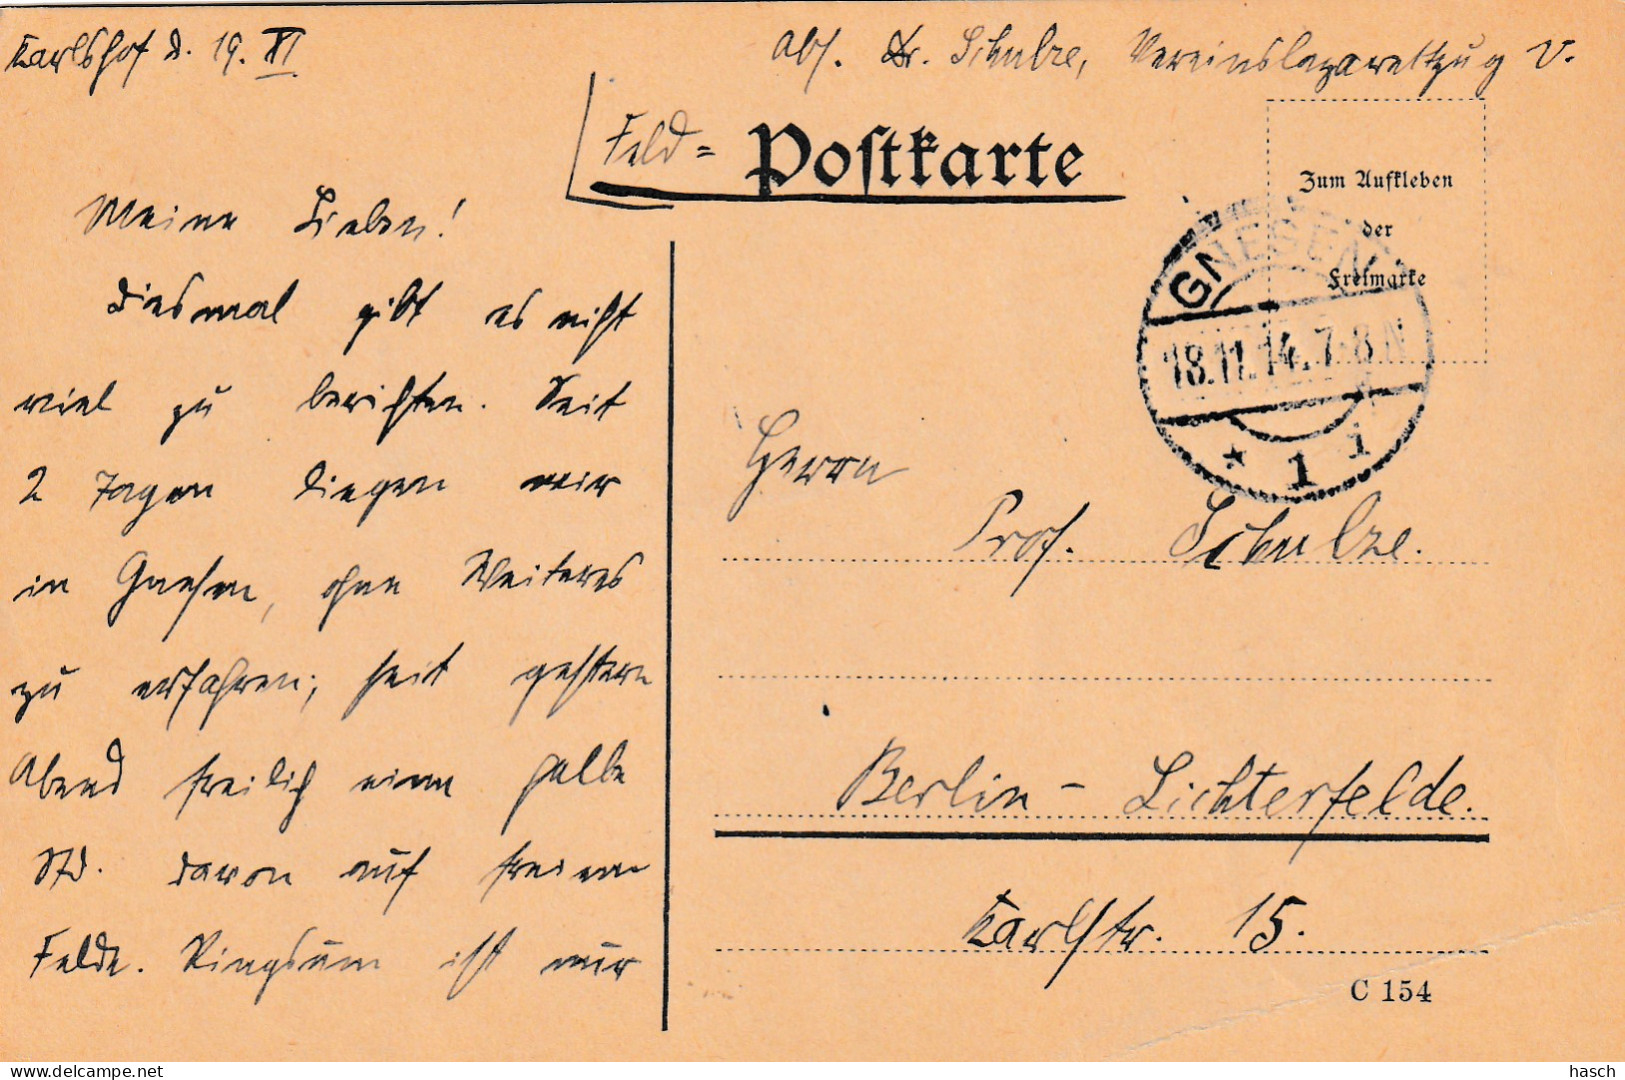 4935 7 Feldpostkarte 18-11-1914 Gnesen 1 (Polen) Nach Berlin Lichterfelde. Absender Dr Schulze, Krankenpfleger  - Guerre 1914-18